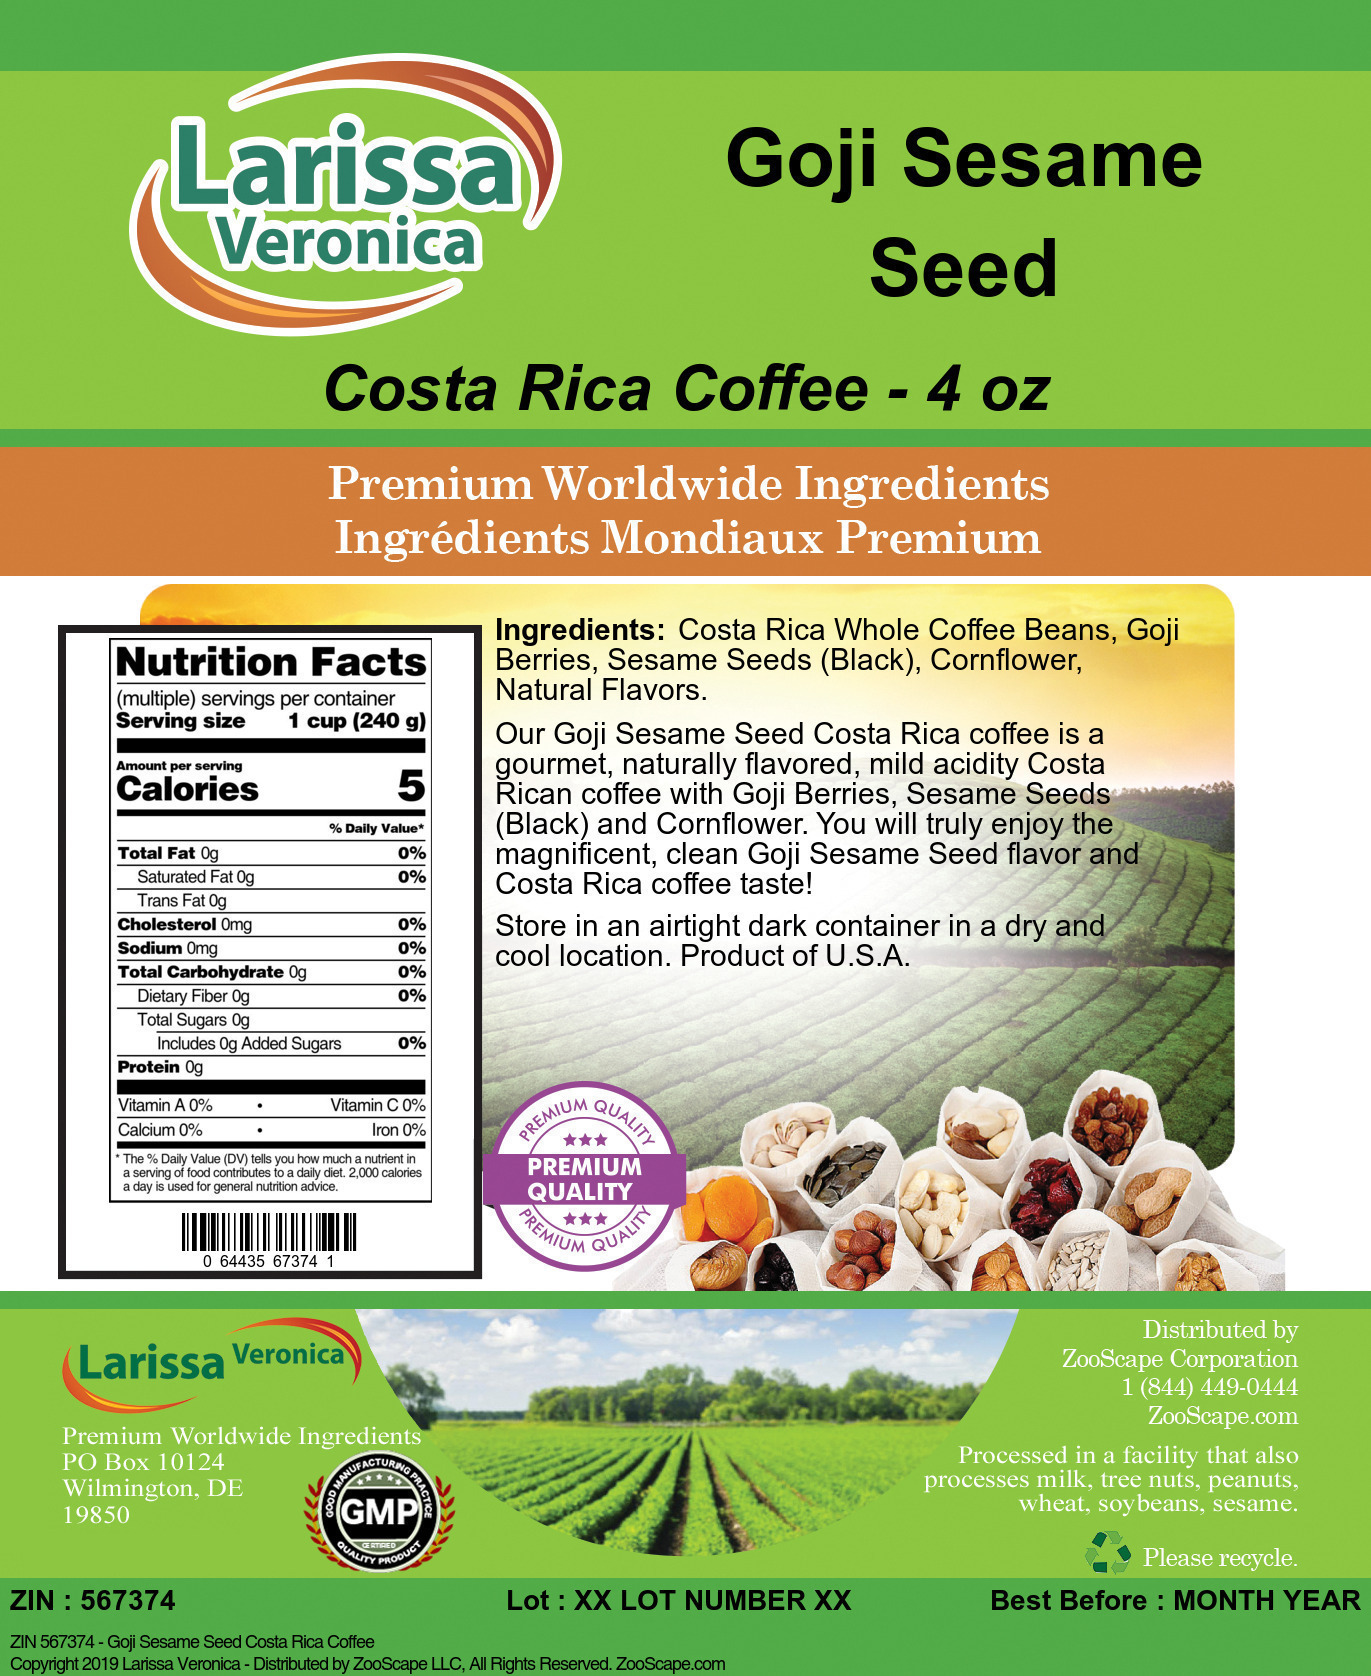 Goji Sesame Seed Costa Rica Coffee - Label